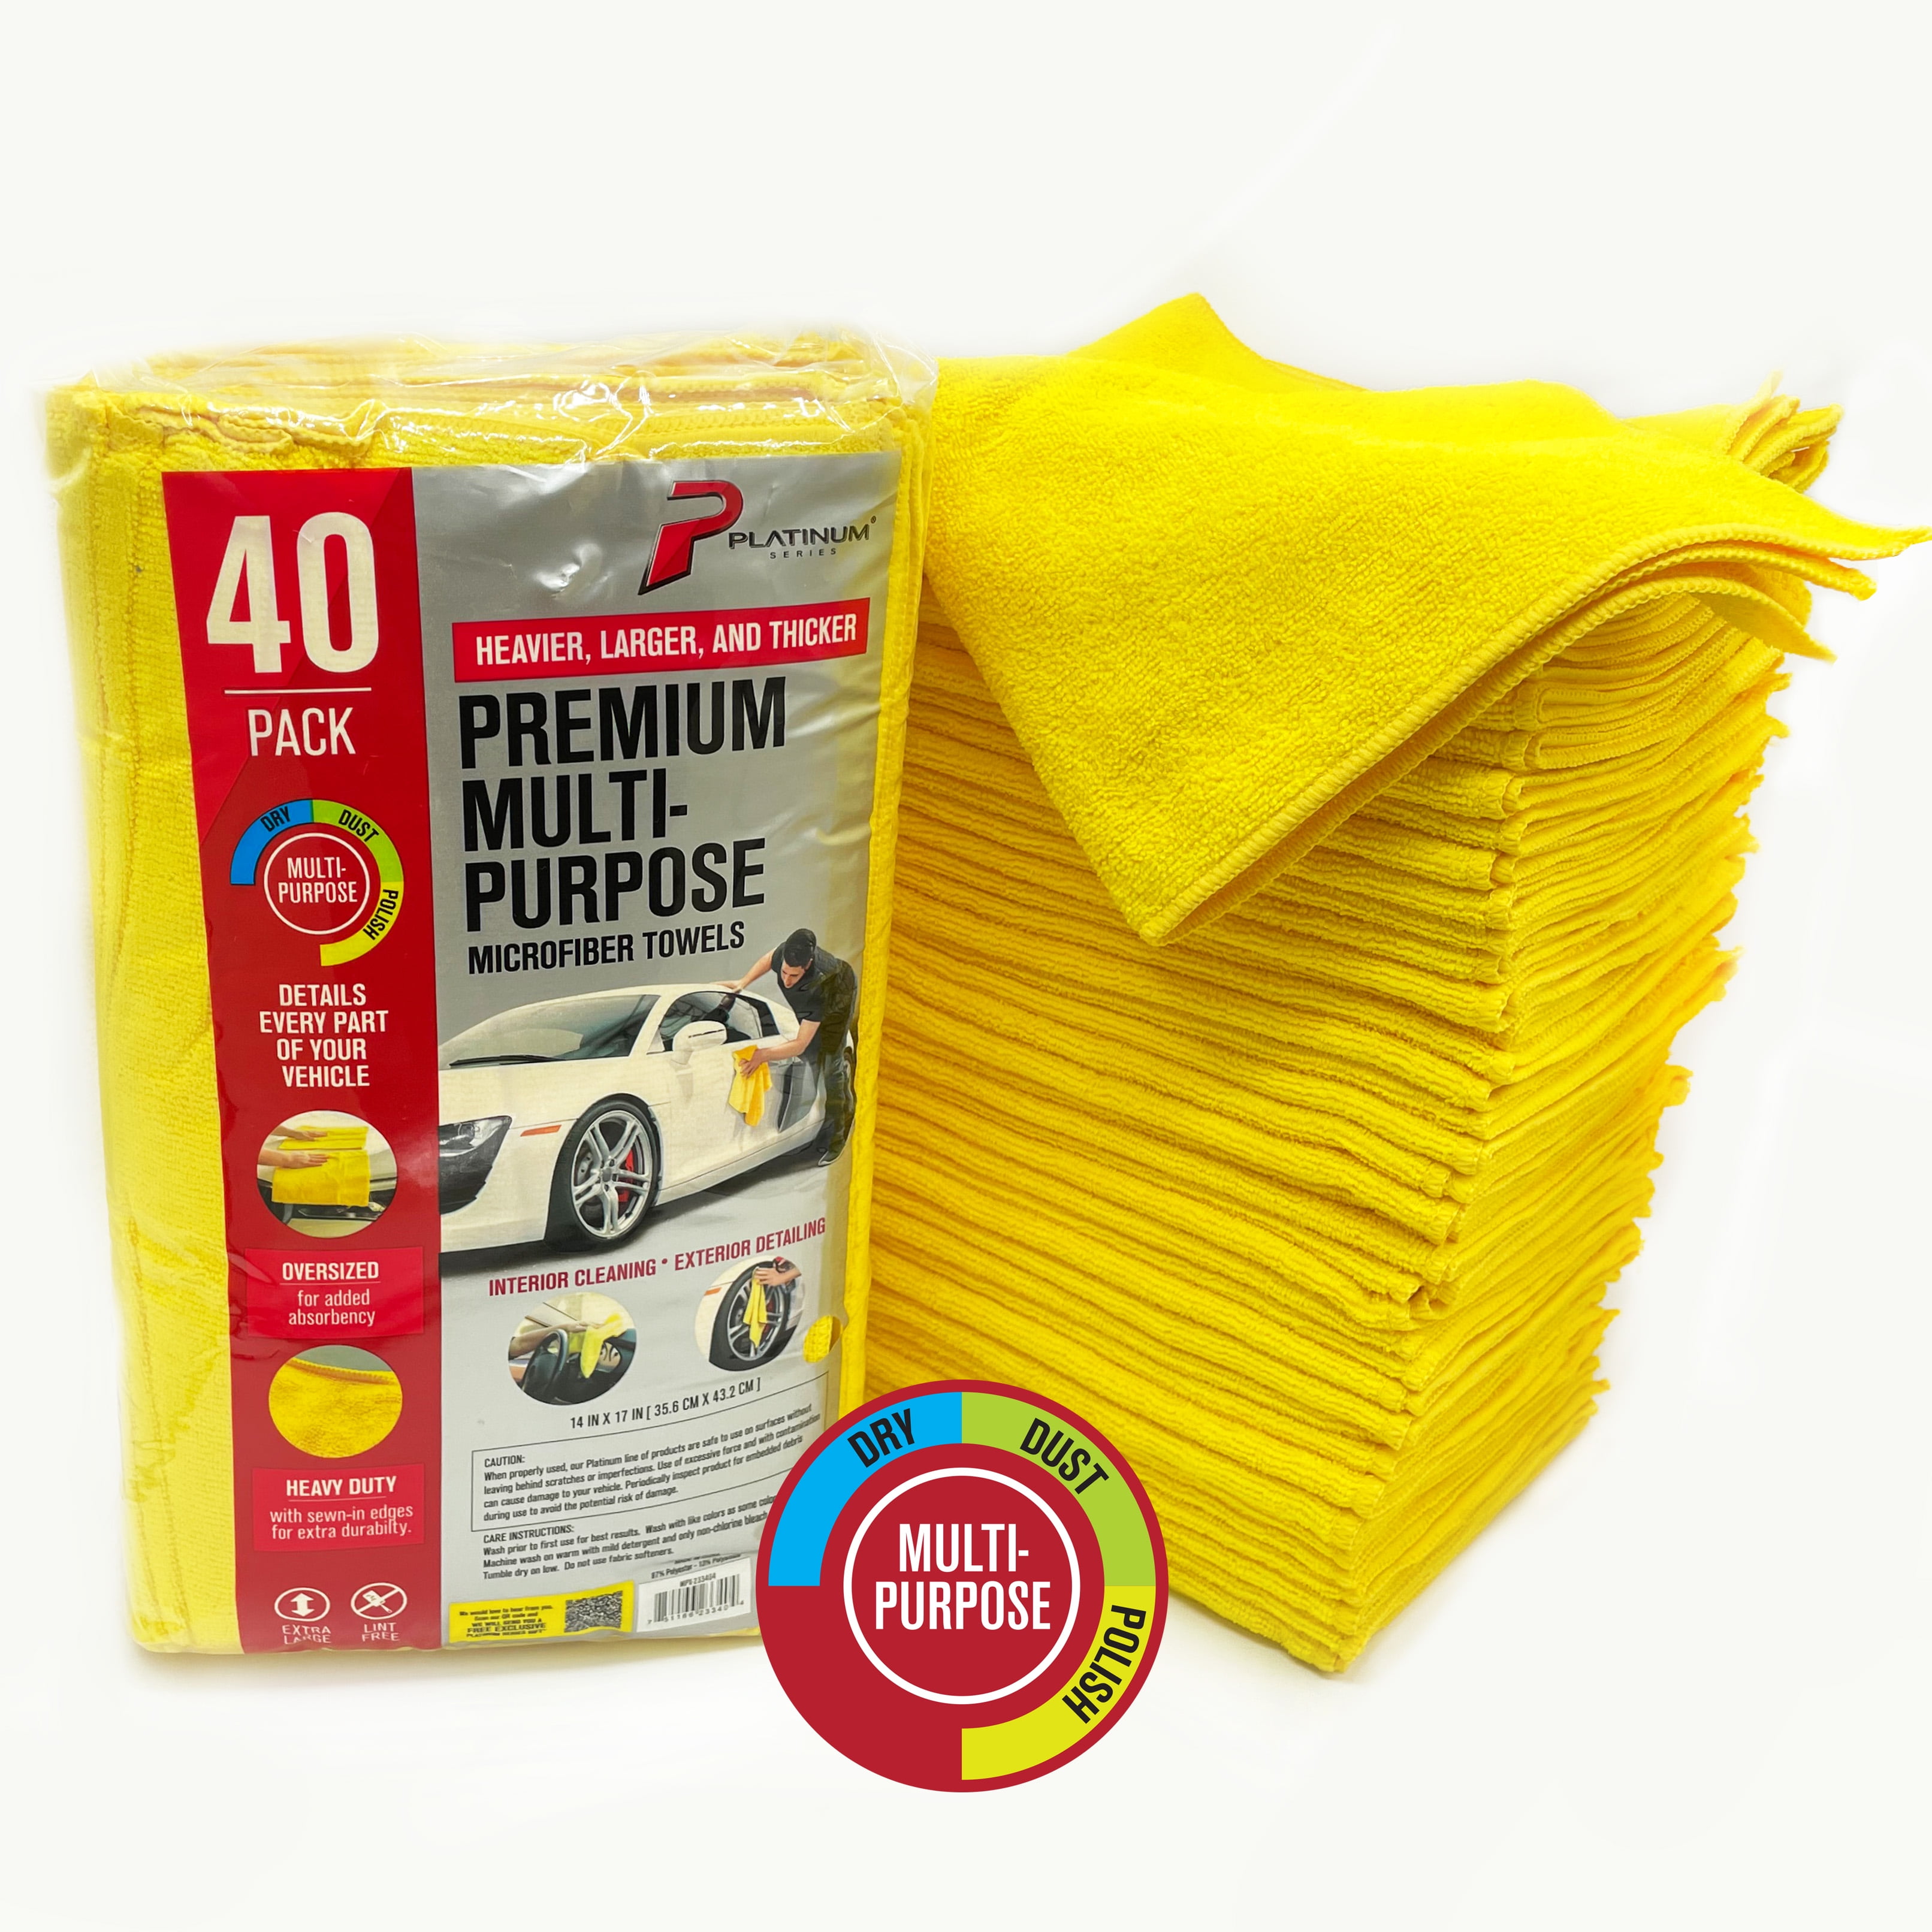 Platinum Series Premium Heavy Duty Multi-Purpose Microfiber Towel, Cleaning, Detailing, 40 Pack, Yellow